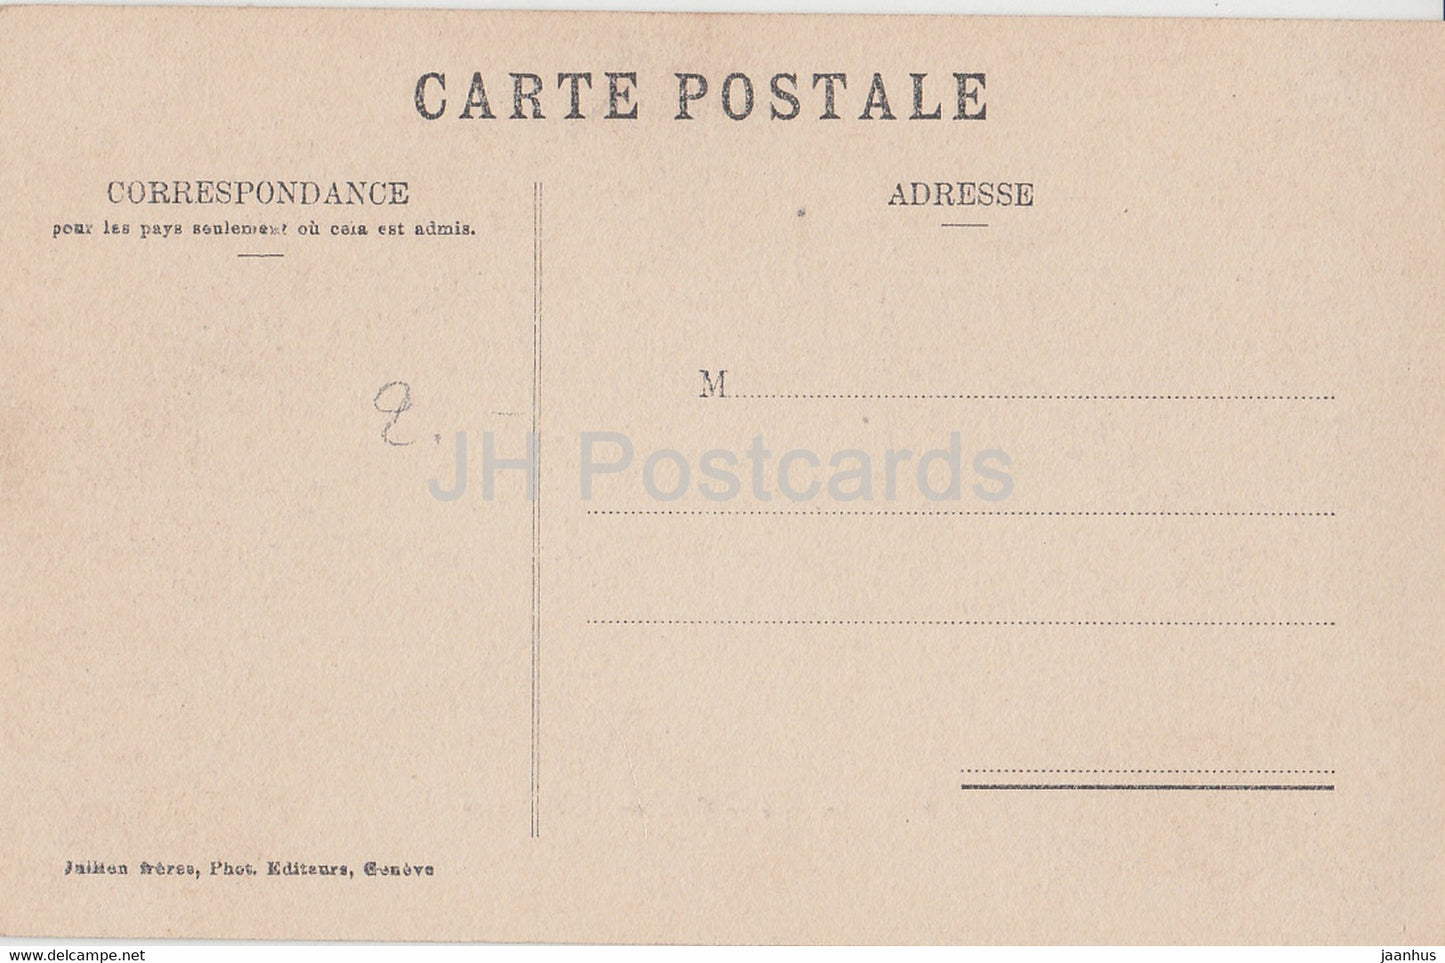 Geneve - Geneva - Quai du Mont Blanc - 241 - old postcard - 1911 - Switzerland - used